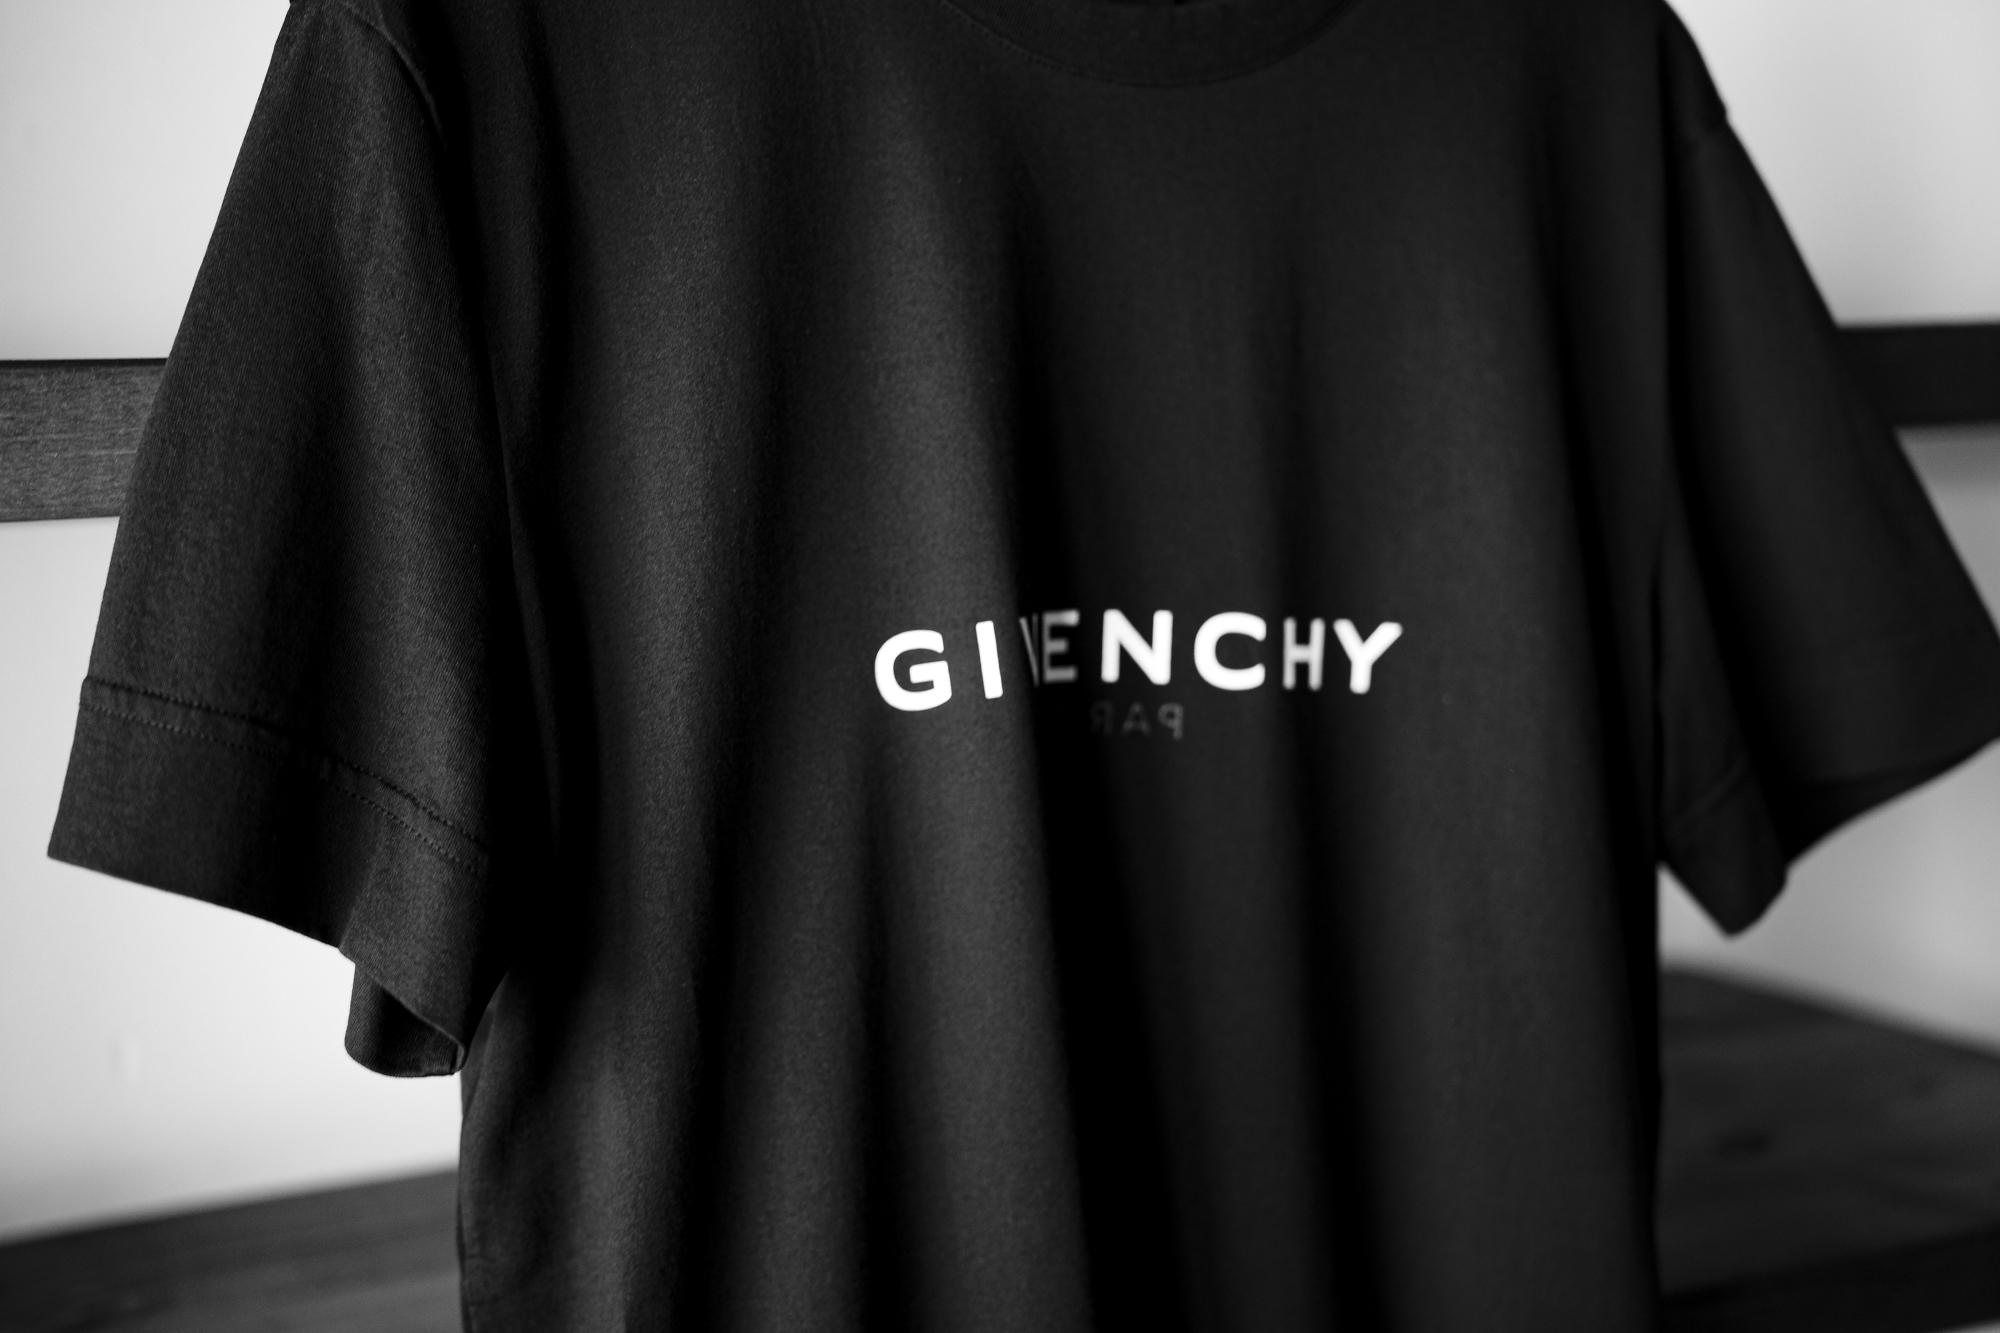 GIVENCHY（ジバンシー）GIVENCHY Reverse slim t-shirt in cotton (リバース スリム Tシャツ) ロゴプリント Tシャツ BLACK(ブラック)  愛知 名古屋 Alto e Diritto altoediritto アルトエデリット